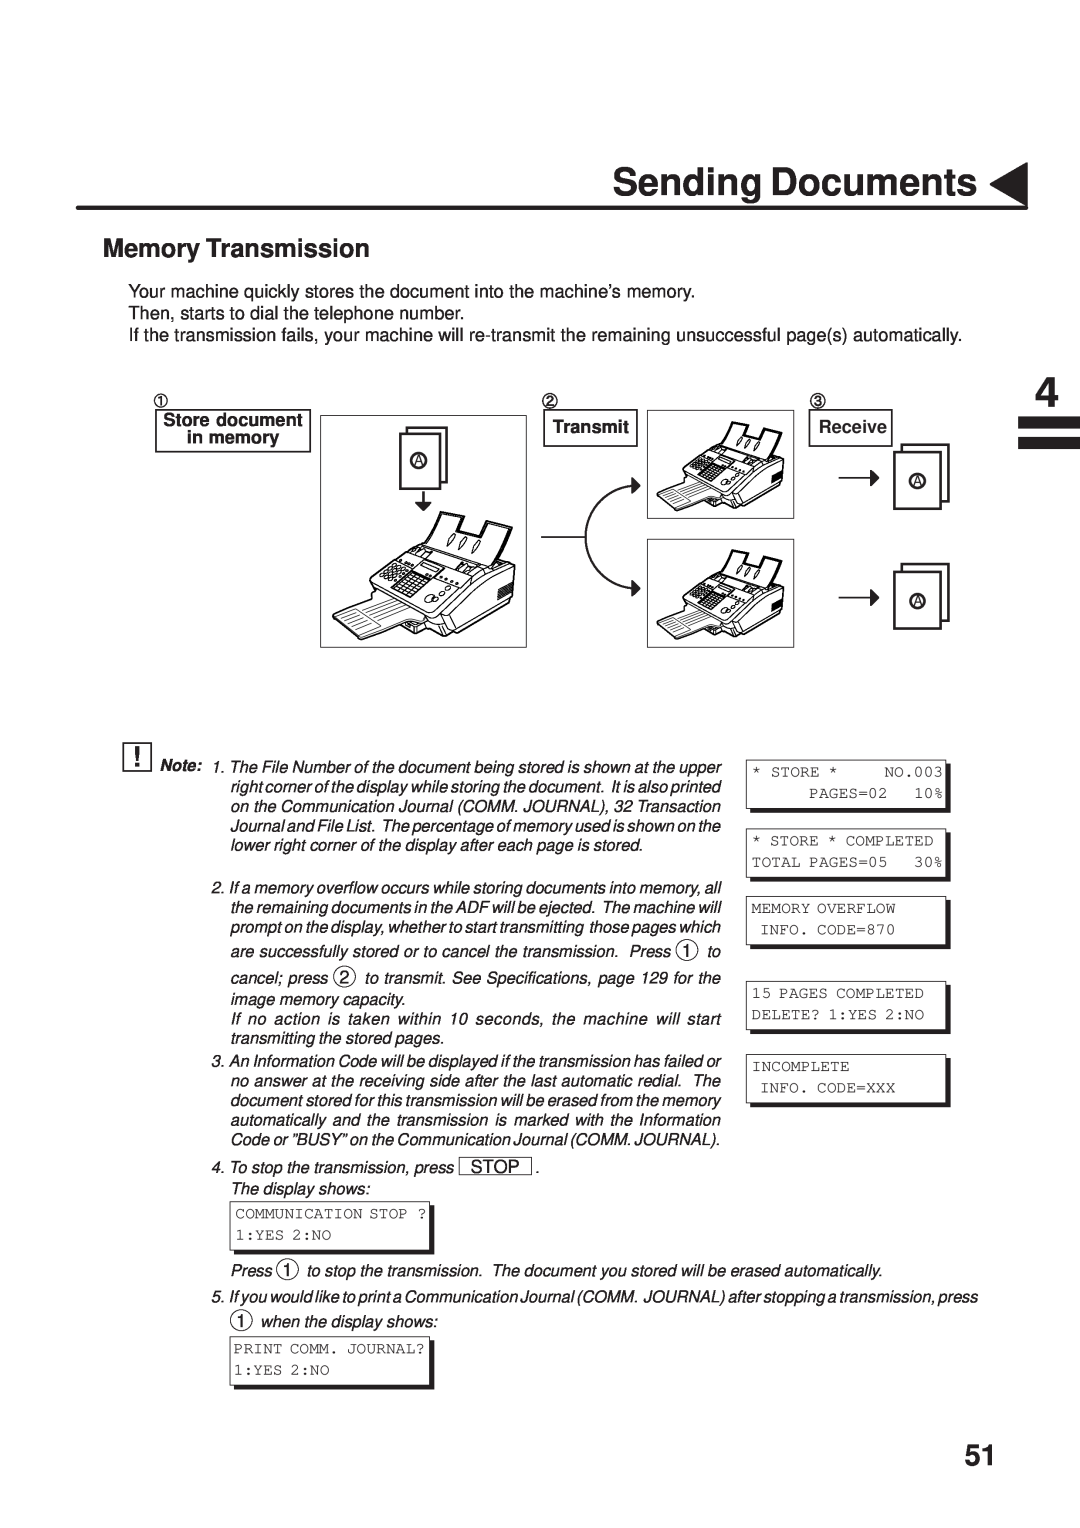 Panasonic UF-333 manual Memory Transmission, Sending Documents, Store document in memory, Transmit, Receive 